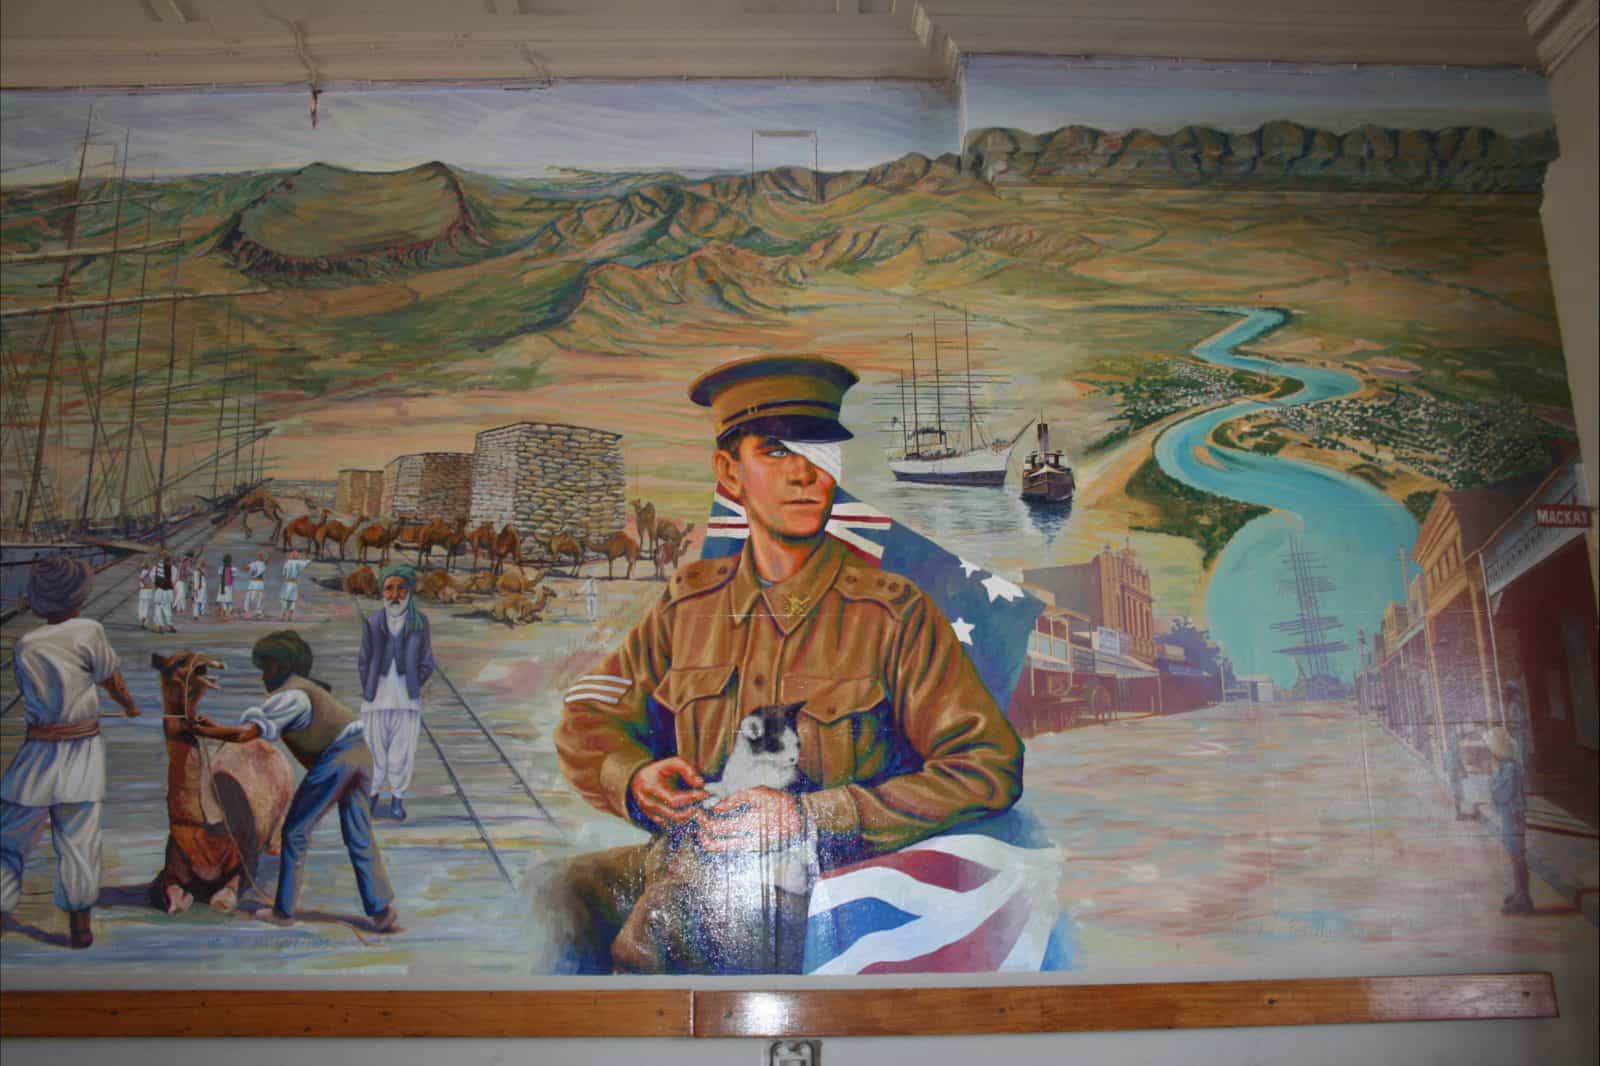 Railway Station Mural